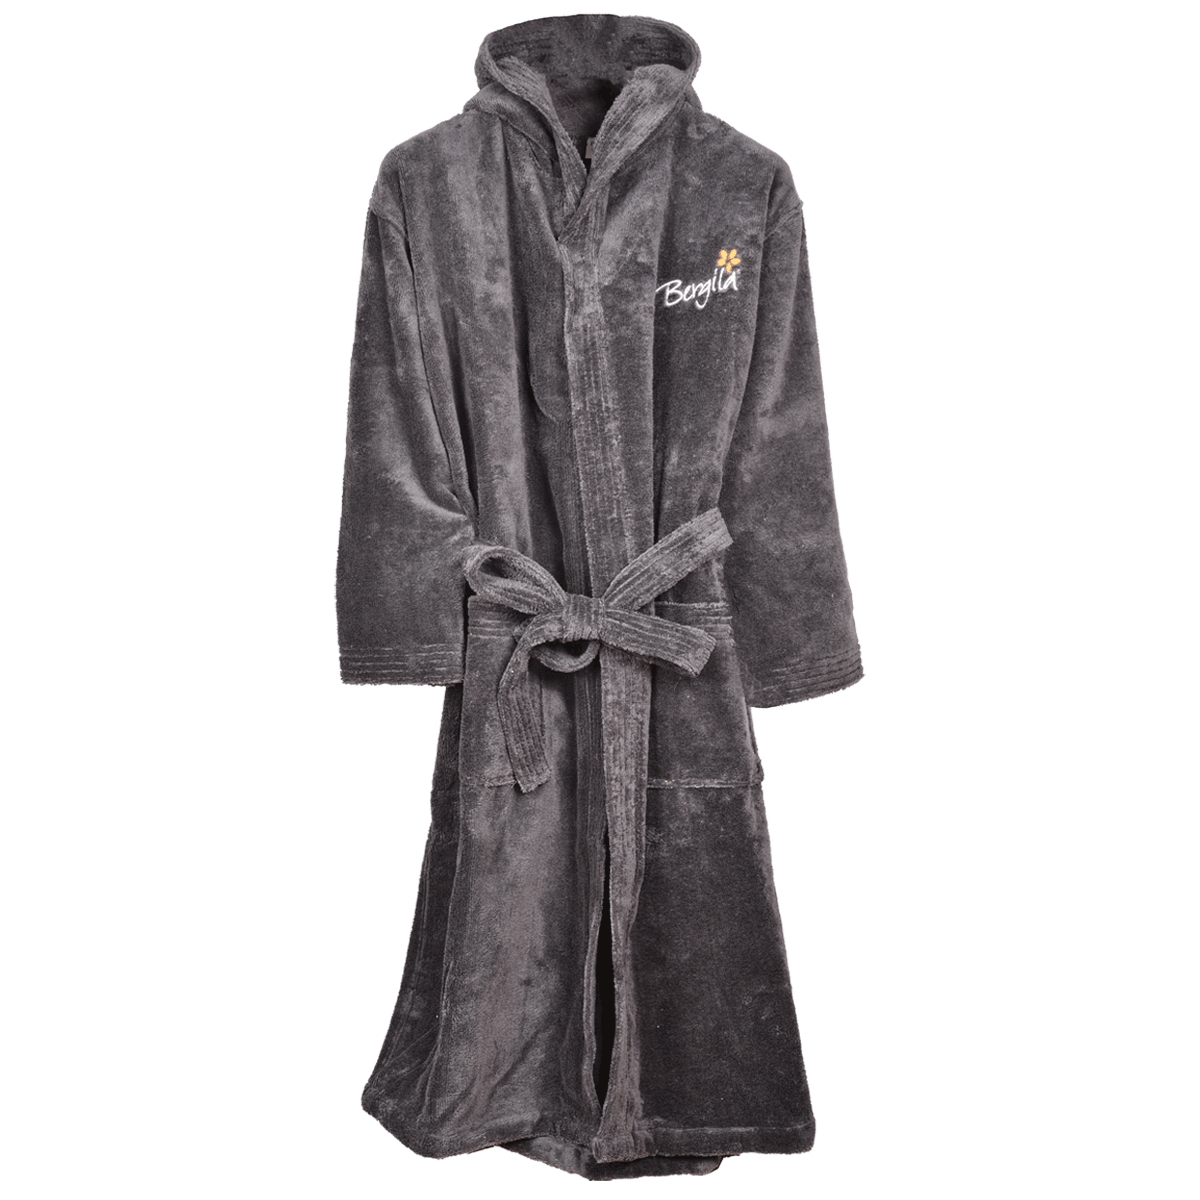 Anthracite bathrobe - size S